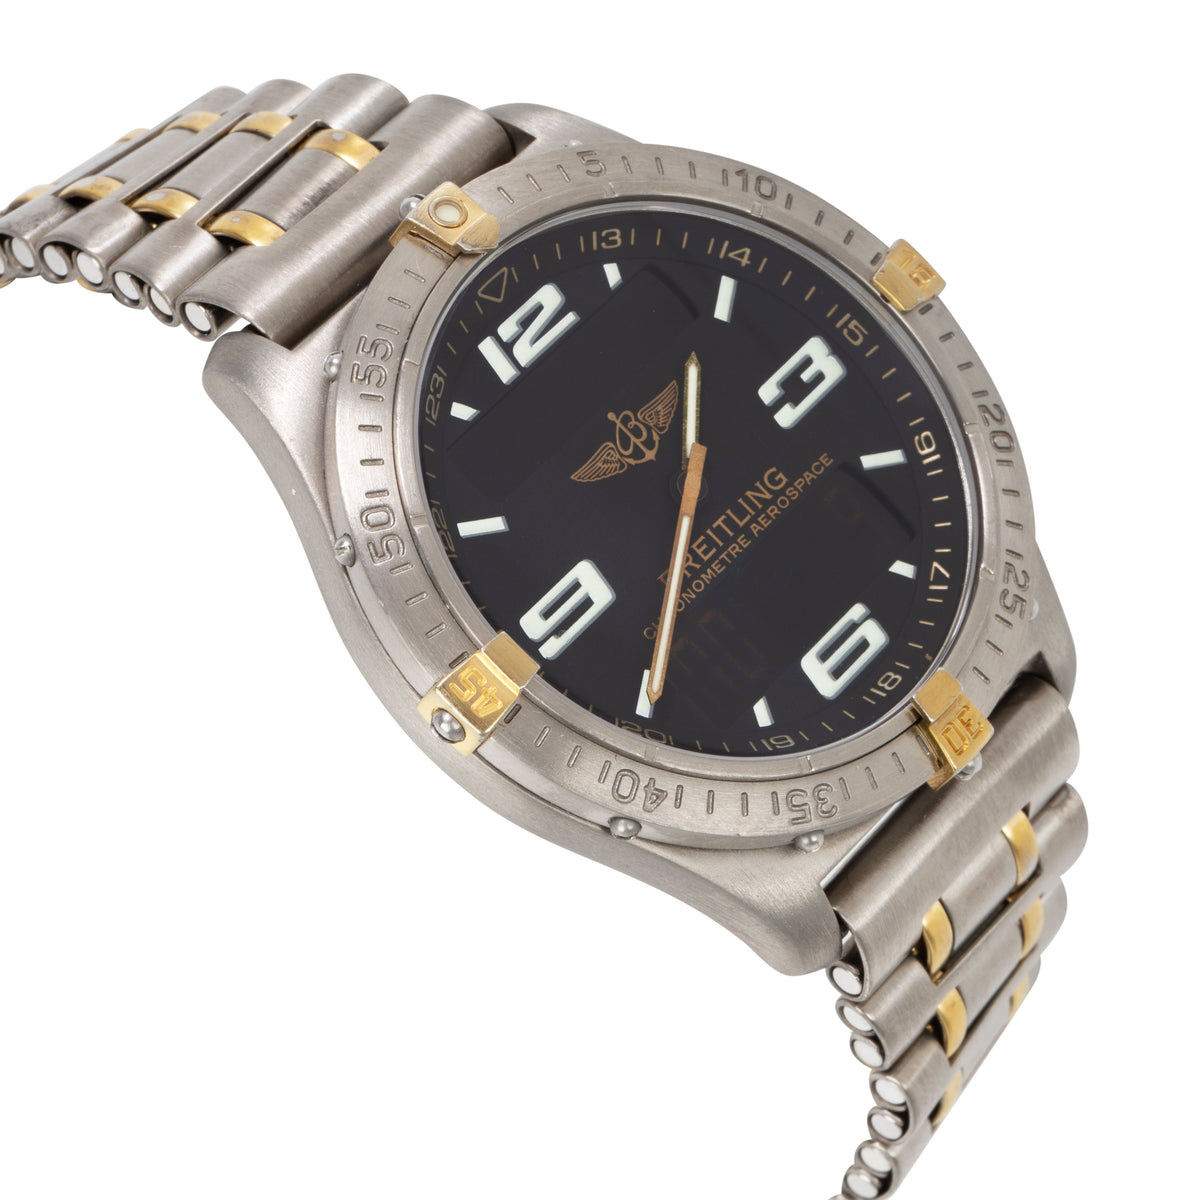 Breitling Aerospace F75362 Men's Watch in 18kt Titanium/Yellow Gold